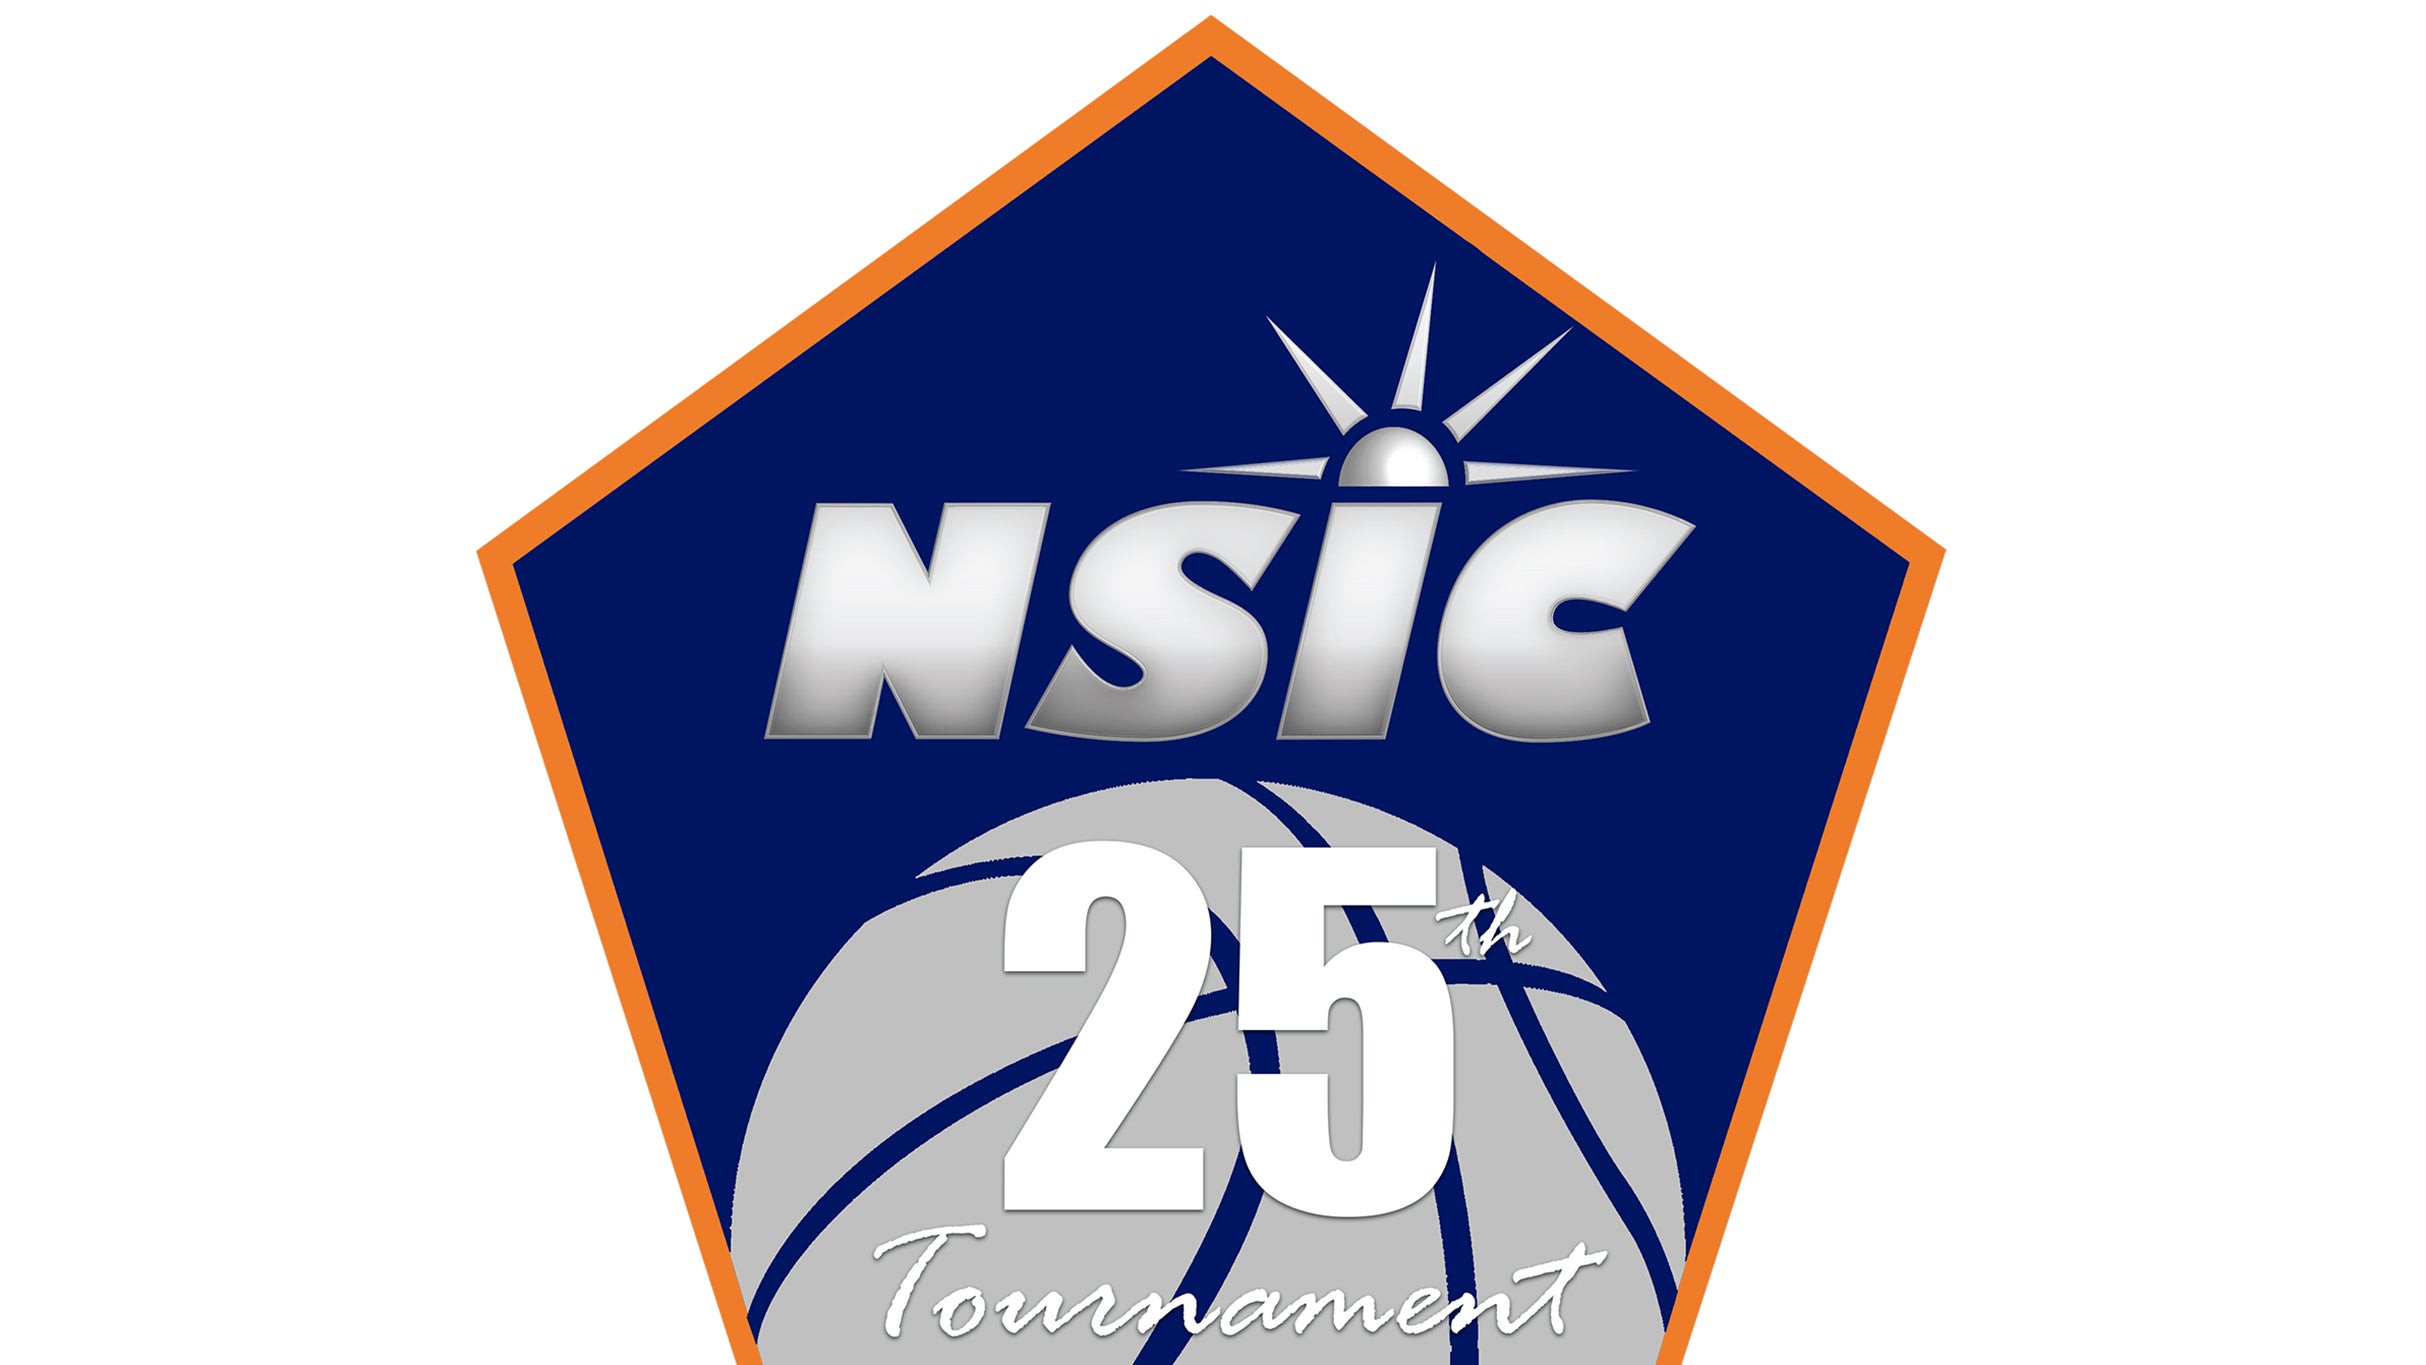 NSIC Tournament - Session 3-Men's at Sanford Pentagon - Sioux Falls, SD 57107